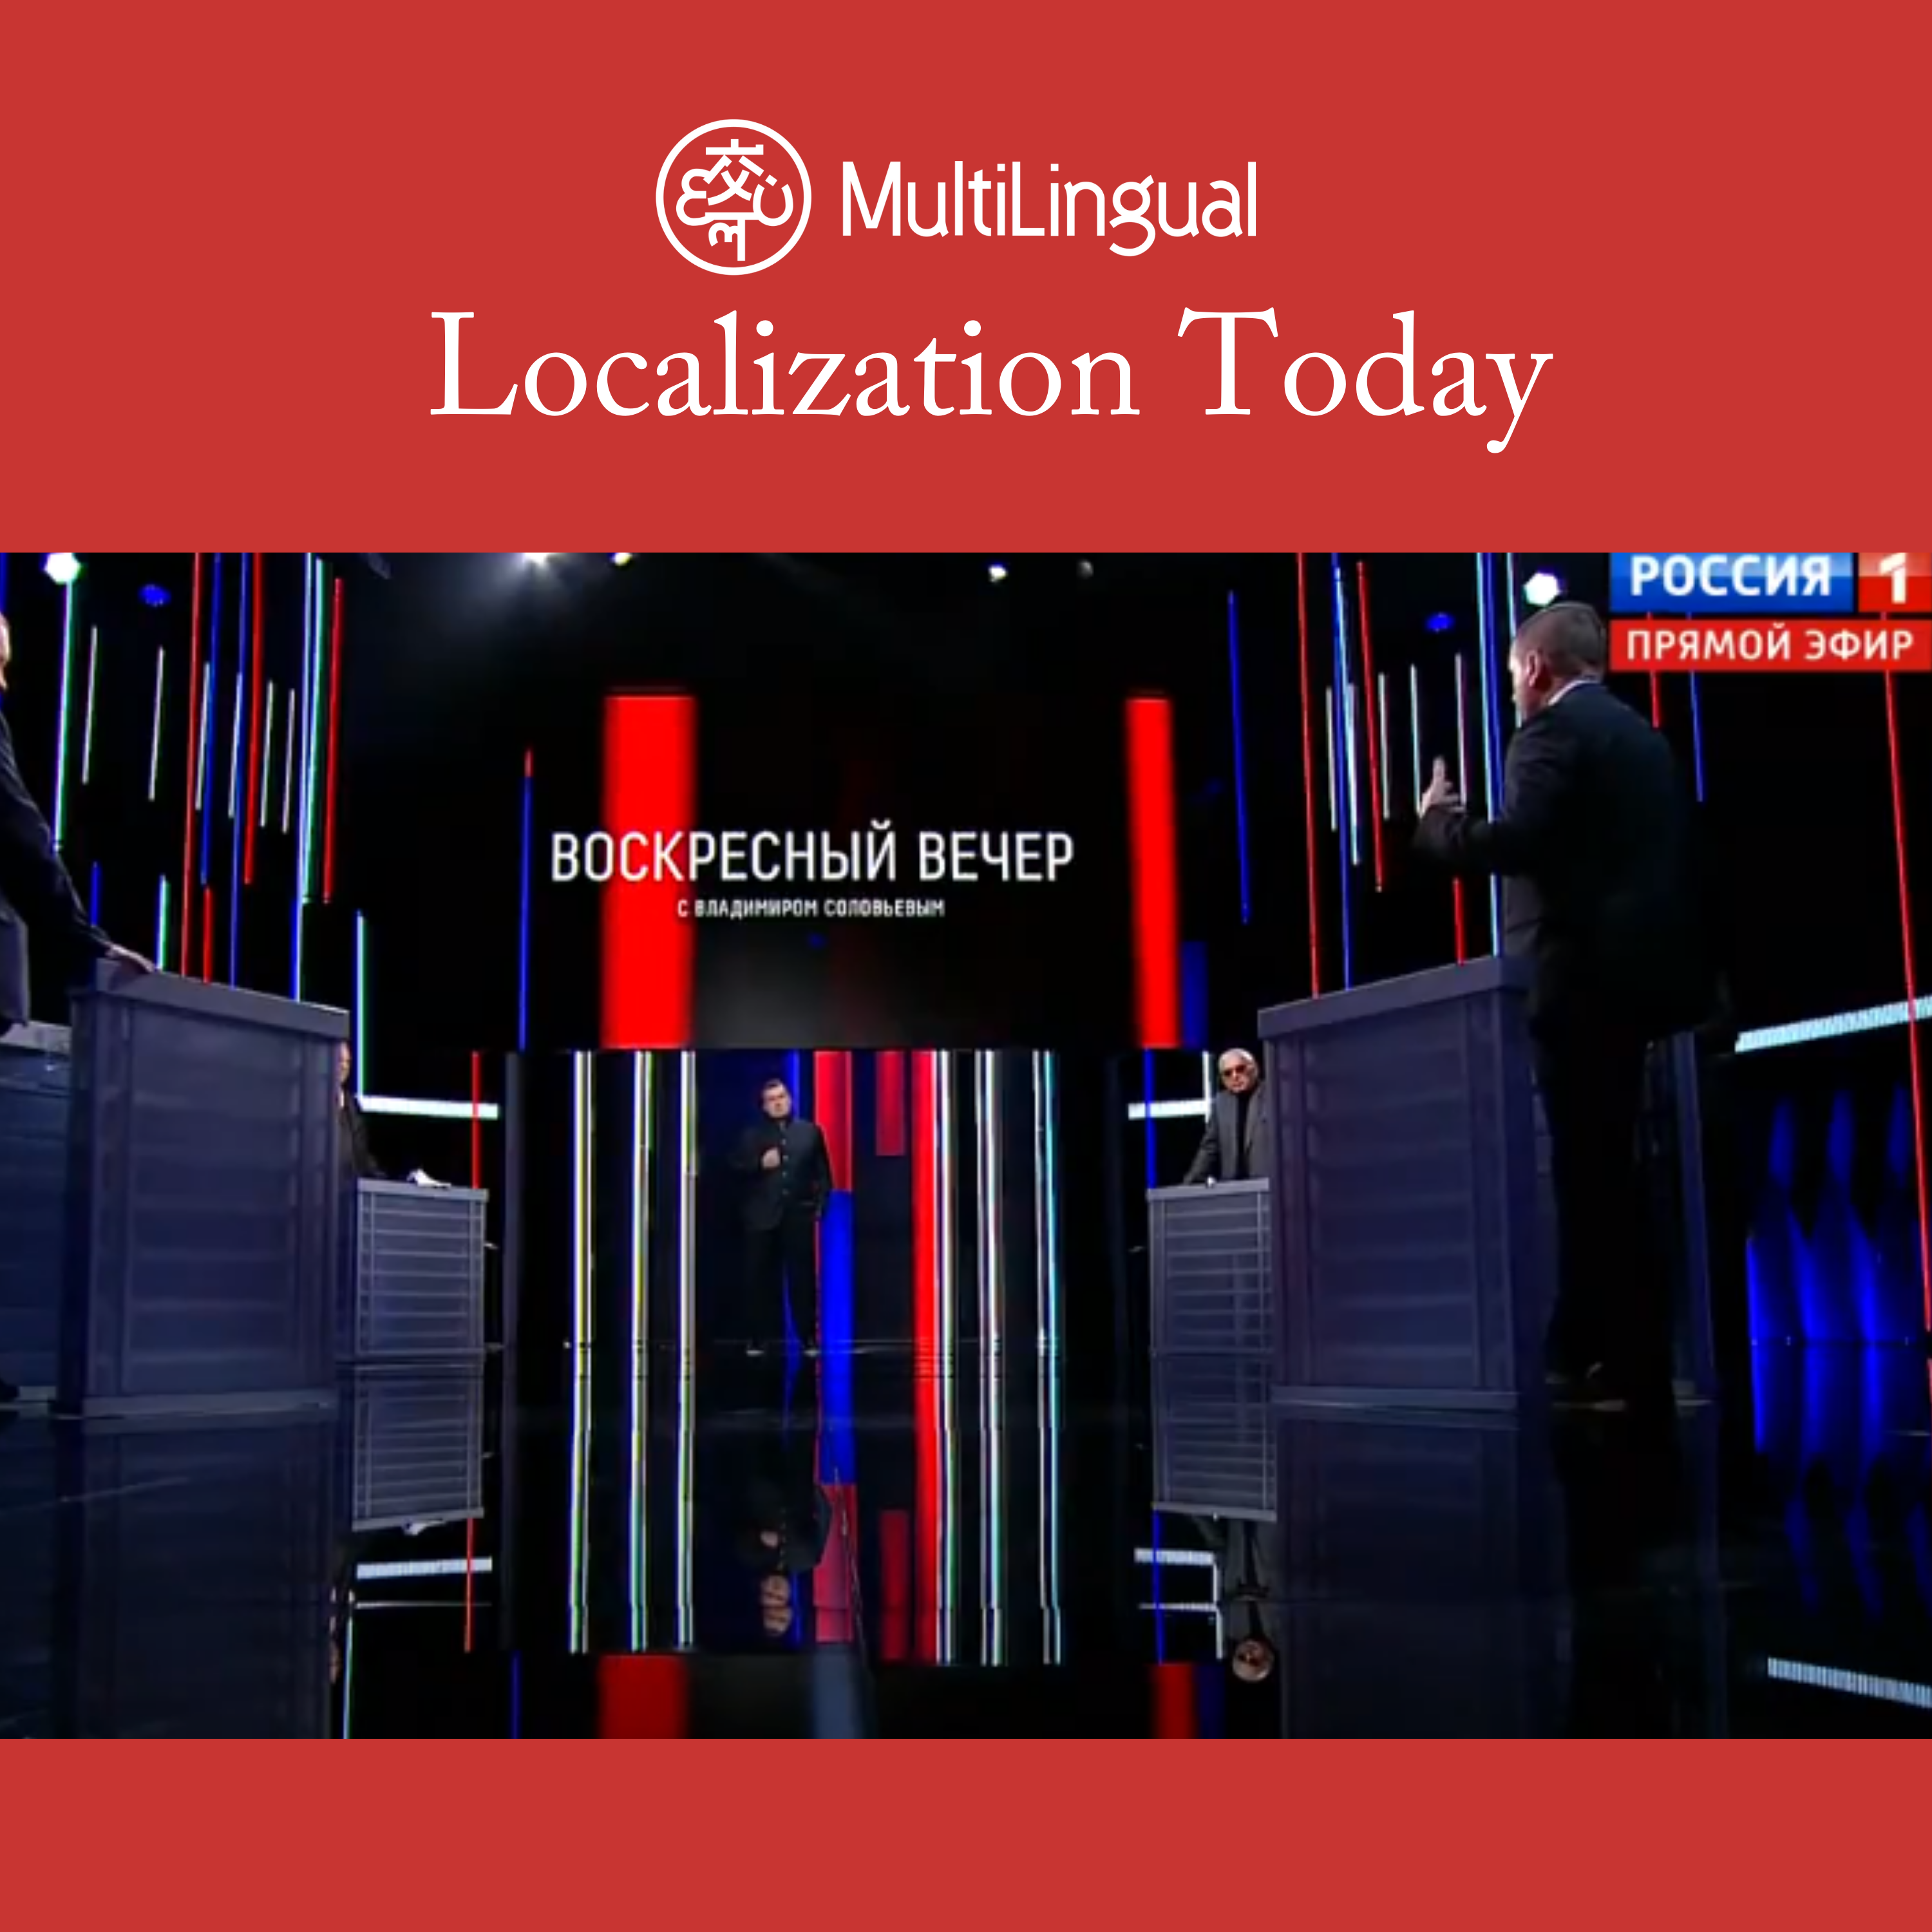 Polish news outlet to broadcast information to Ukraine via satellite